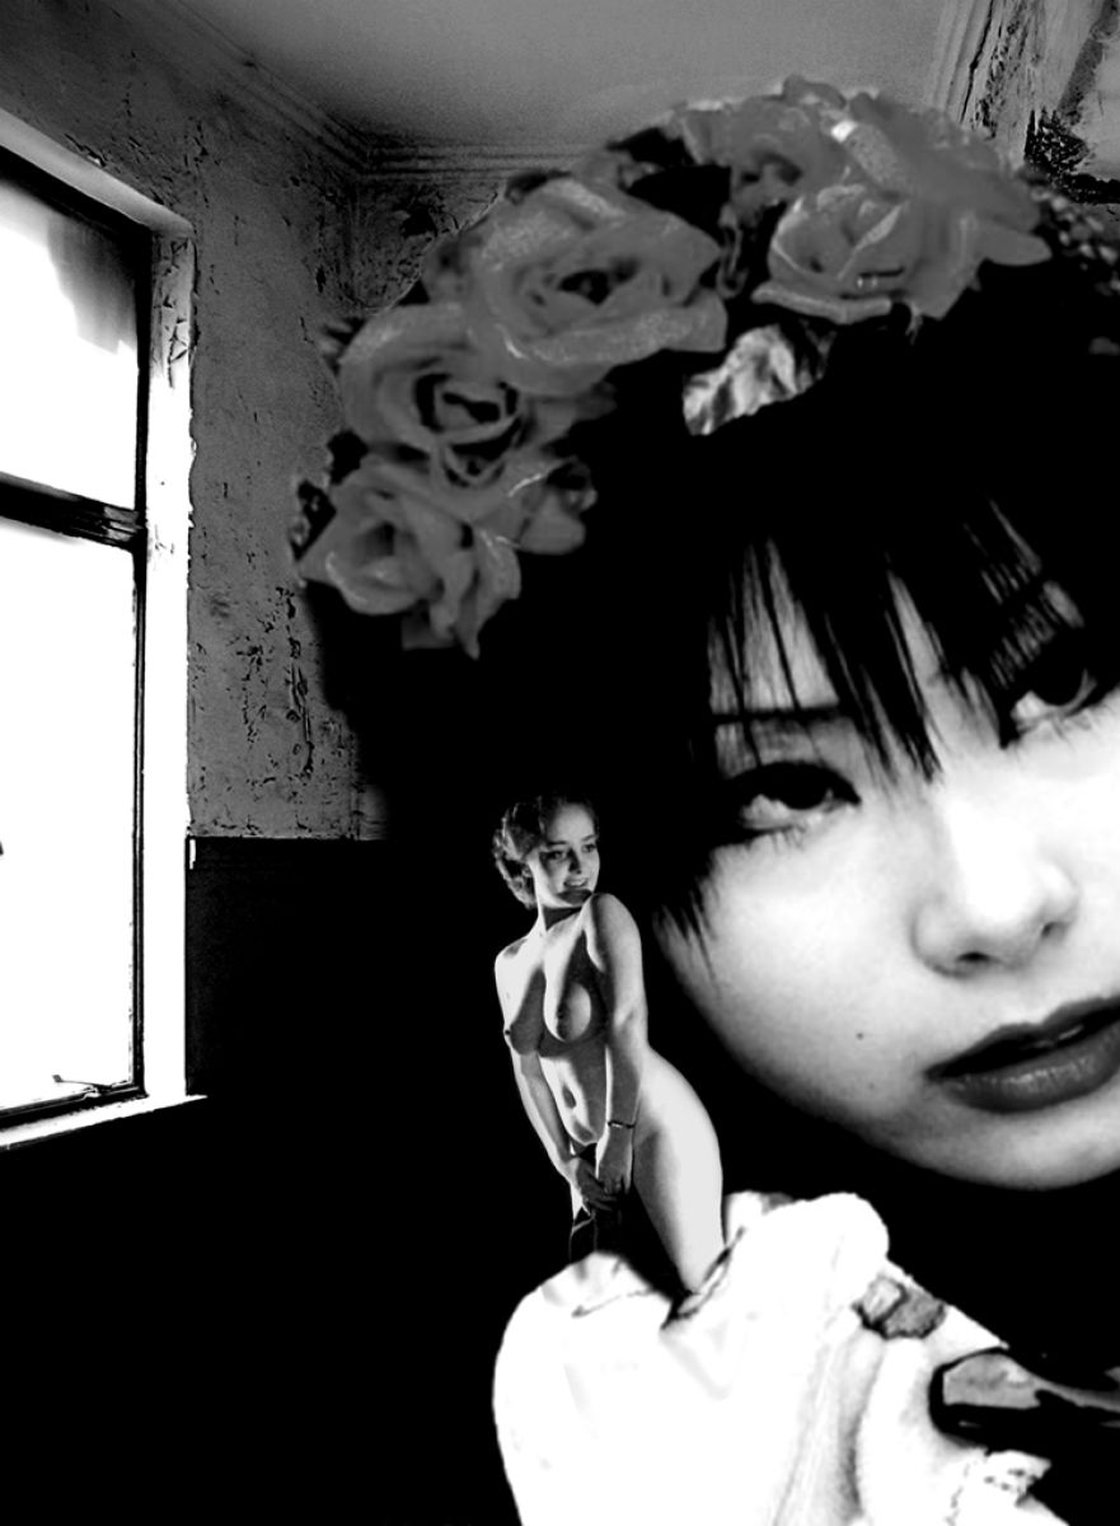 Japanese Girl With A Doll Digital Art Giclée By Alex Solodov Artfinder 9862